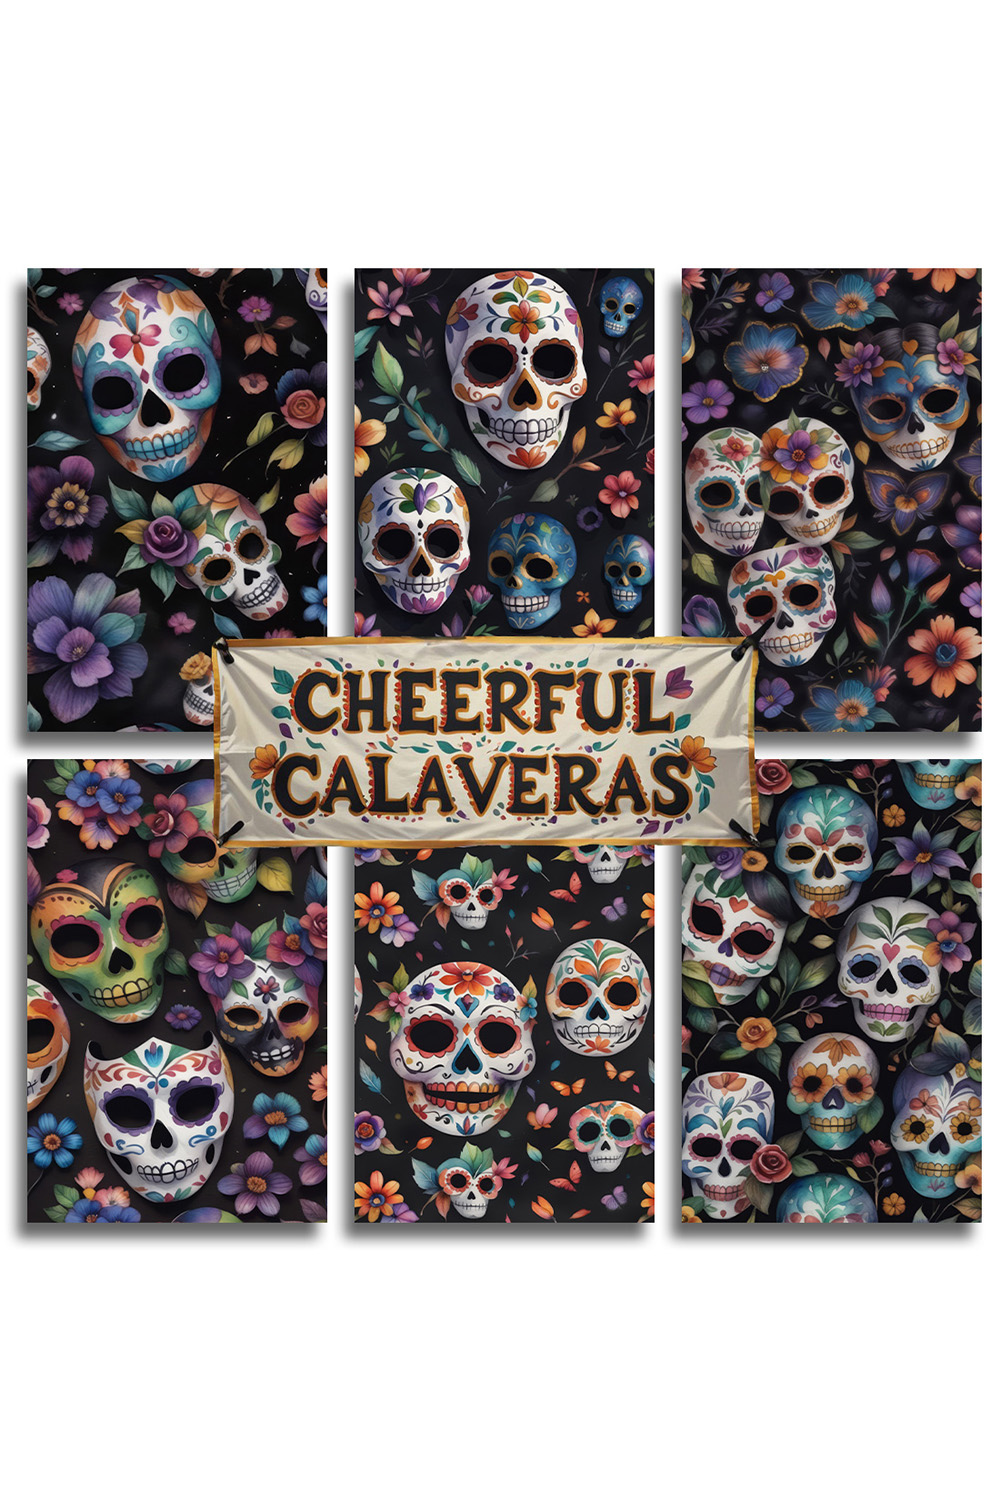 Cheerful Calaveras: Seamless Patterns pinterest preview image.